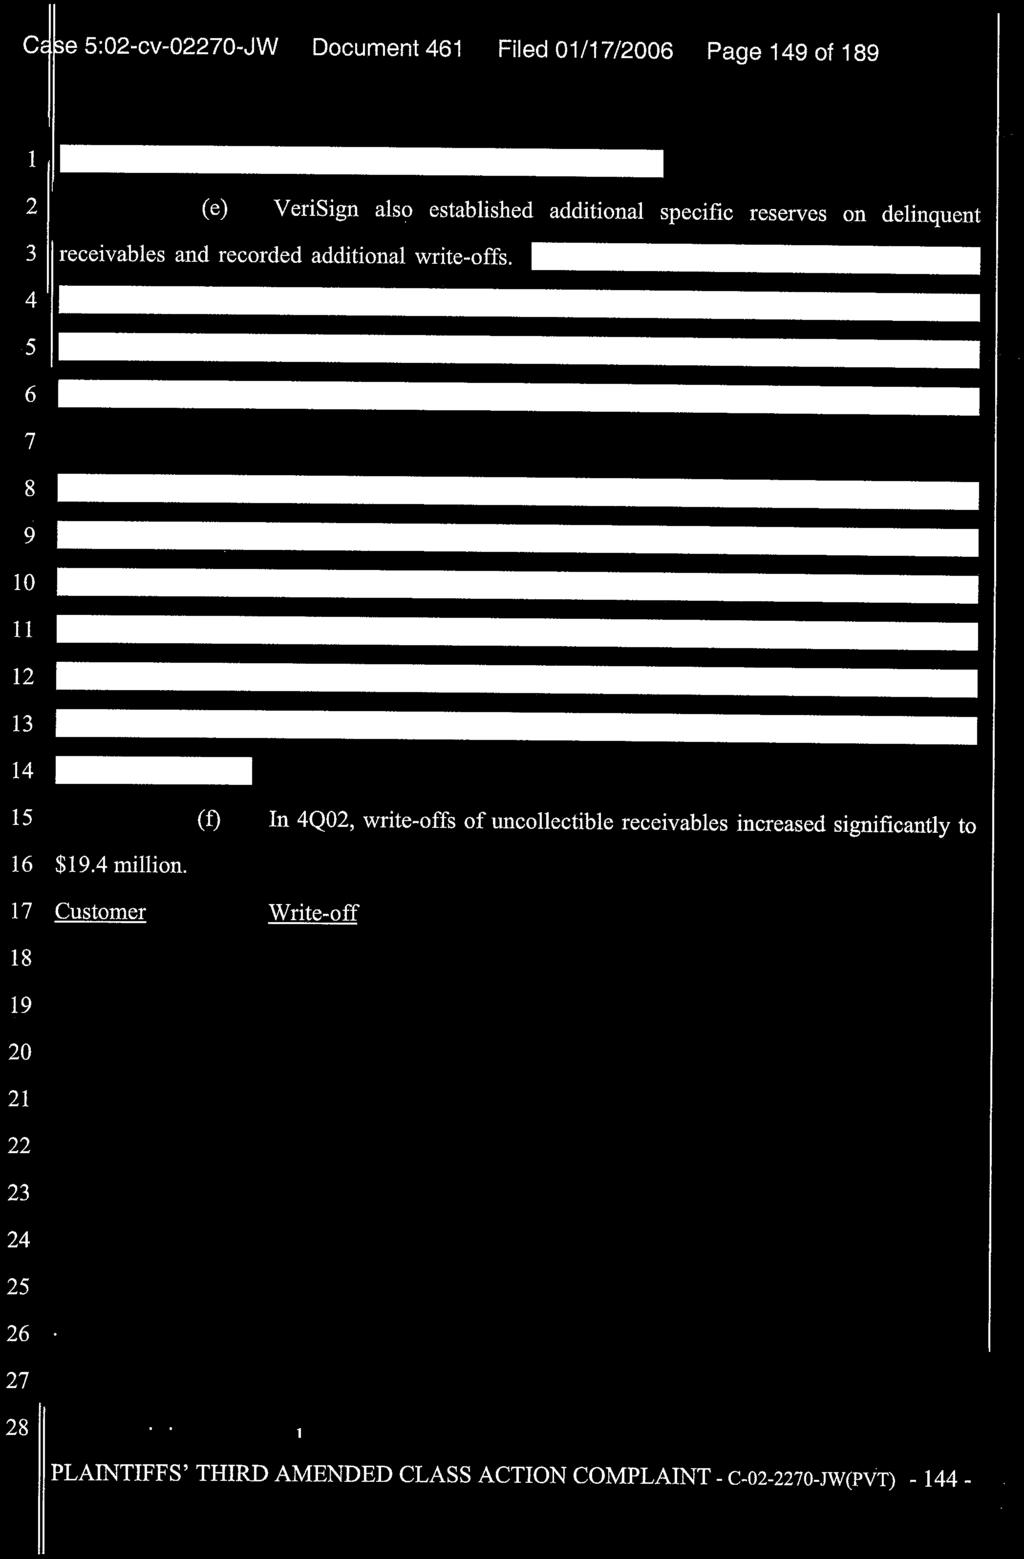 Case 5:02-cv-02270-JW Document